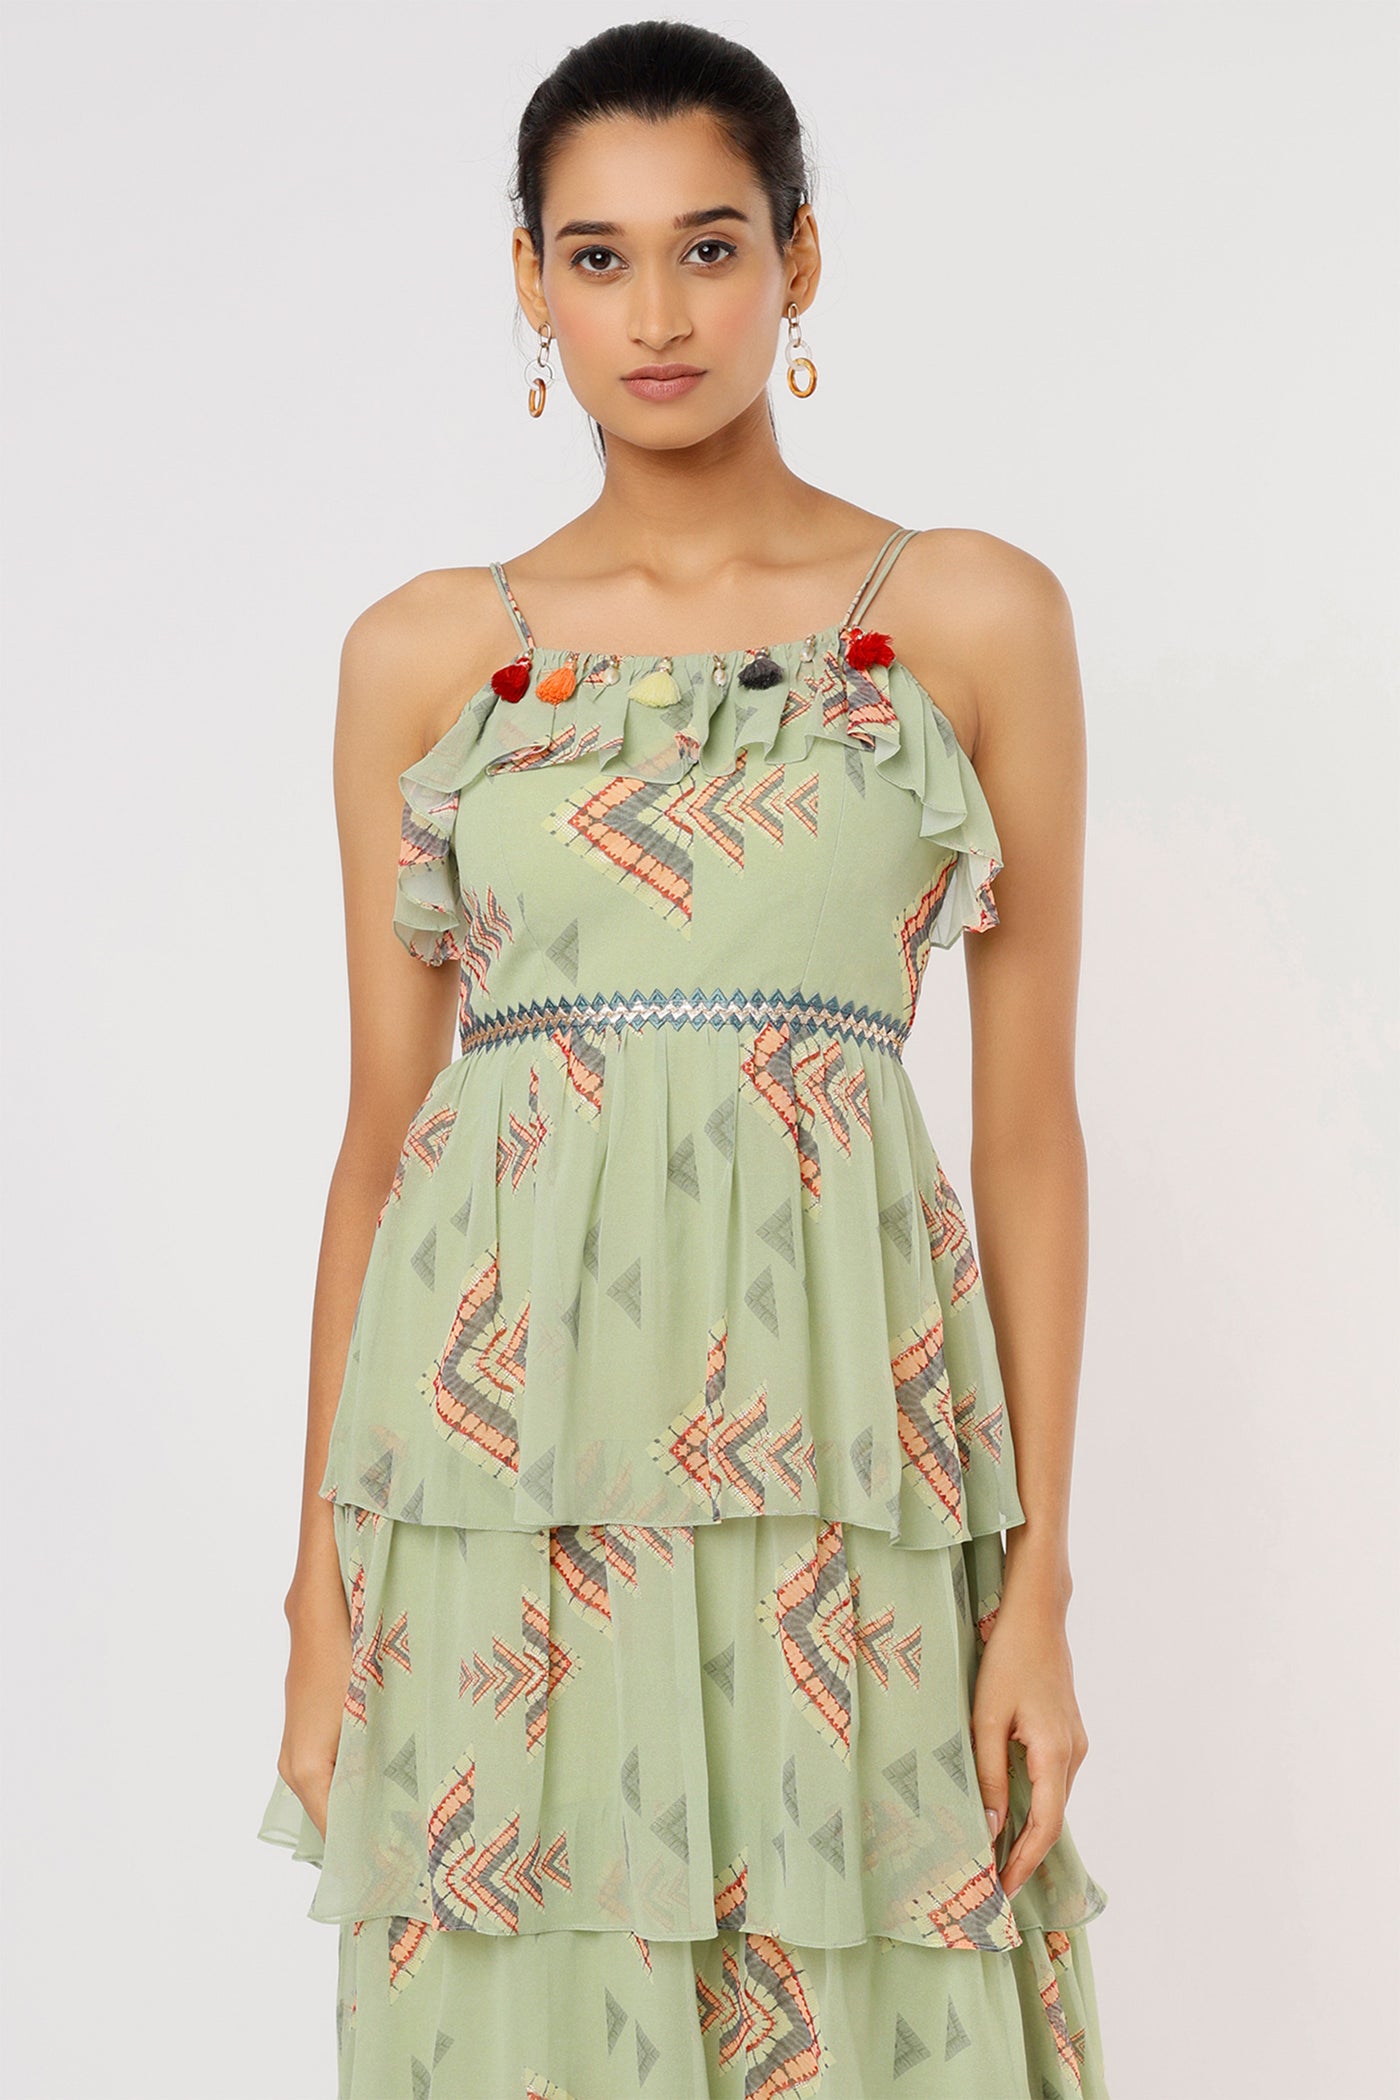 Gopi vaid Thea Strappy Tiered Dress mint green festive Indian designer wear online shopping melange singapore